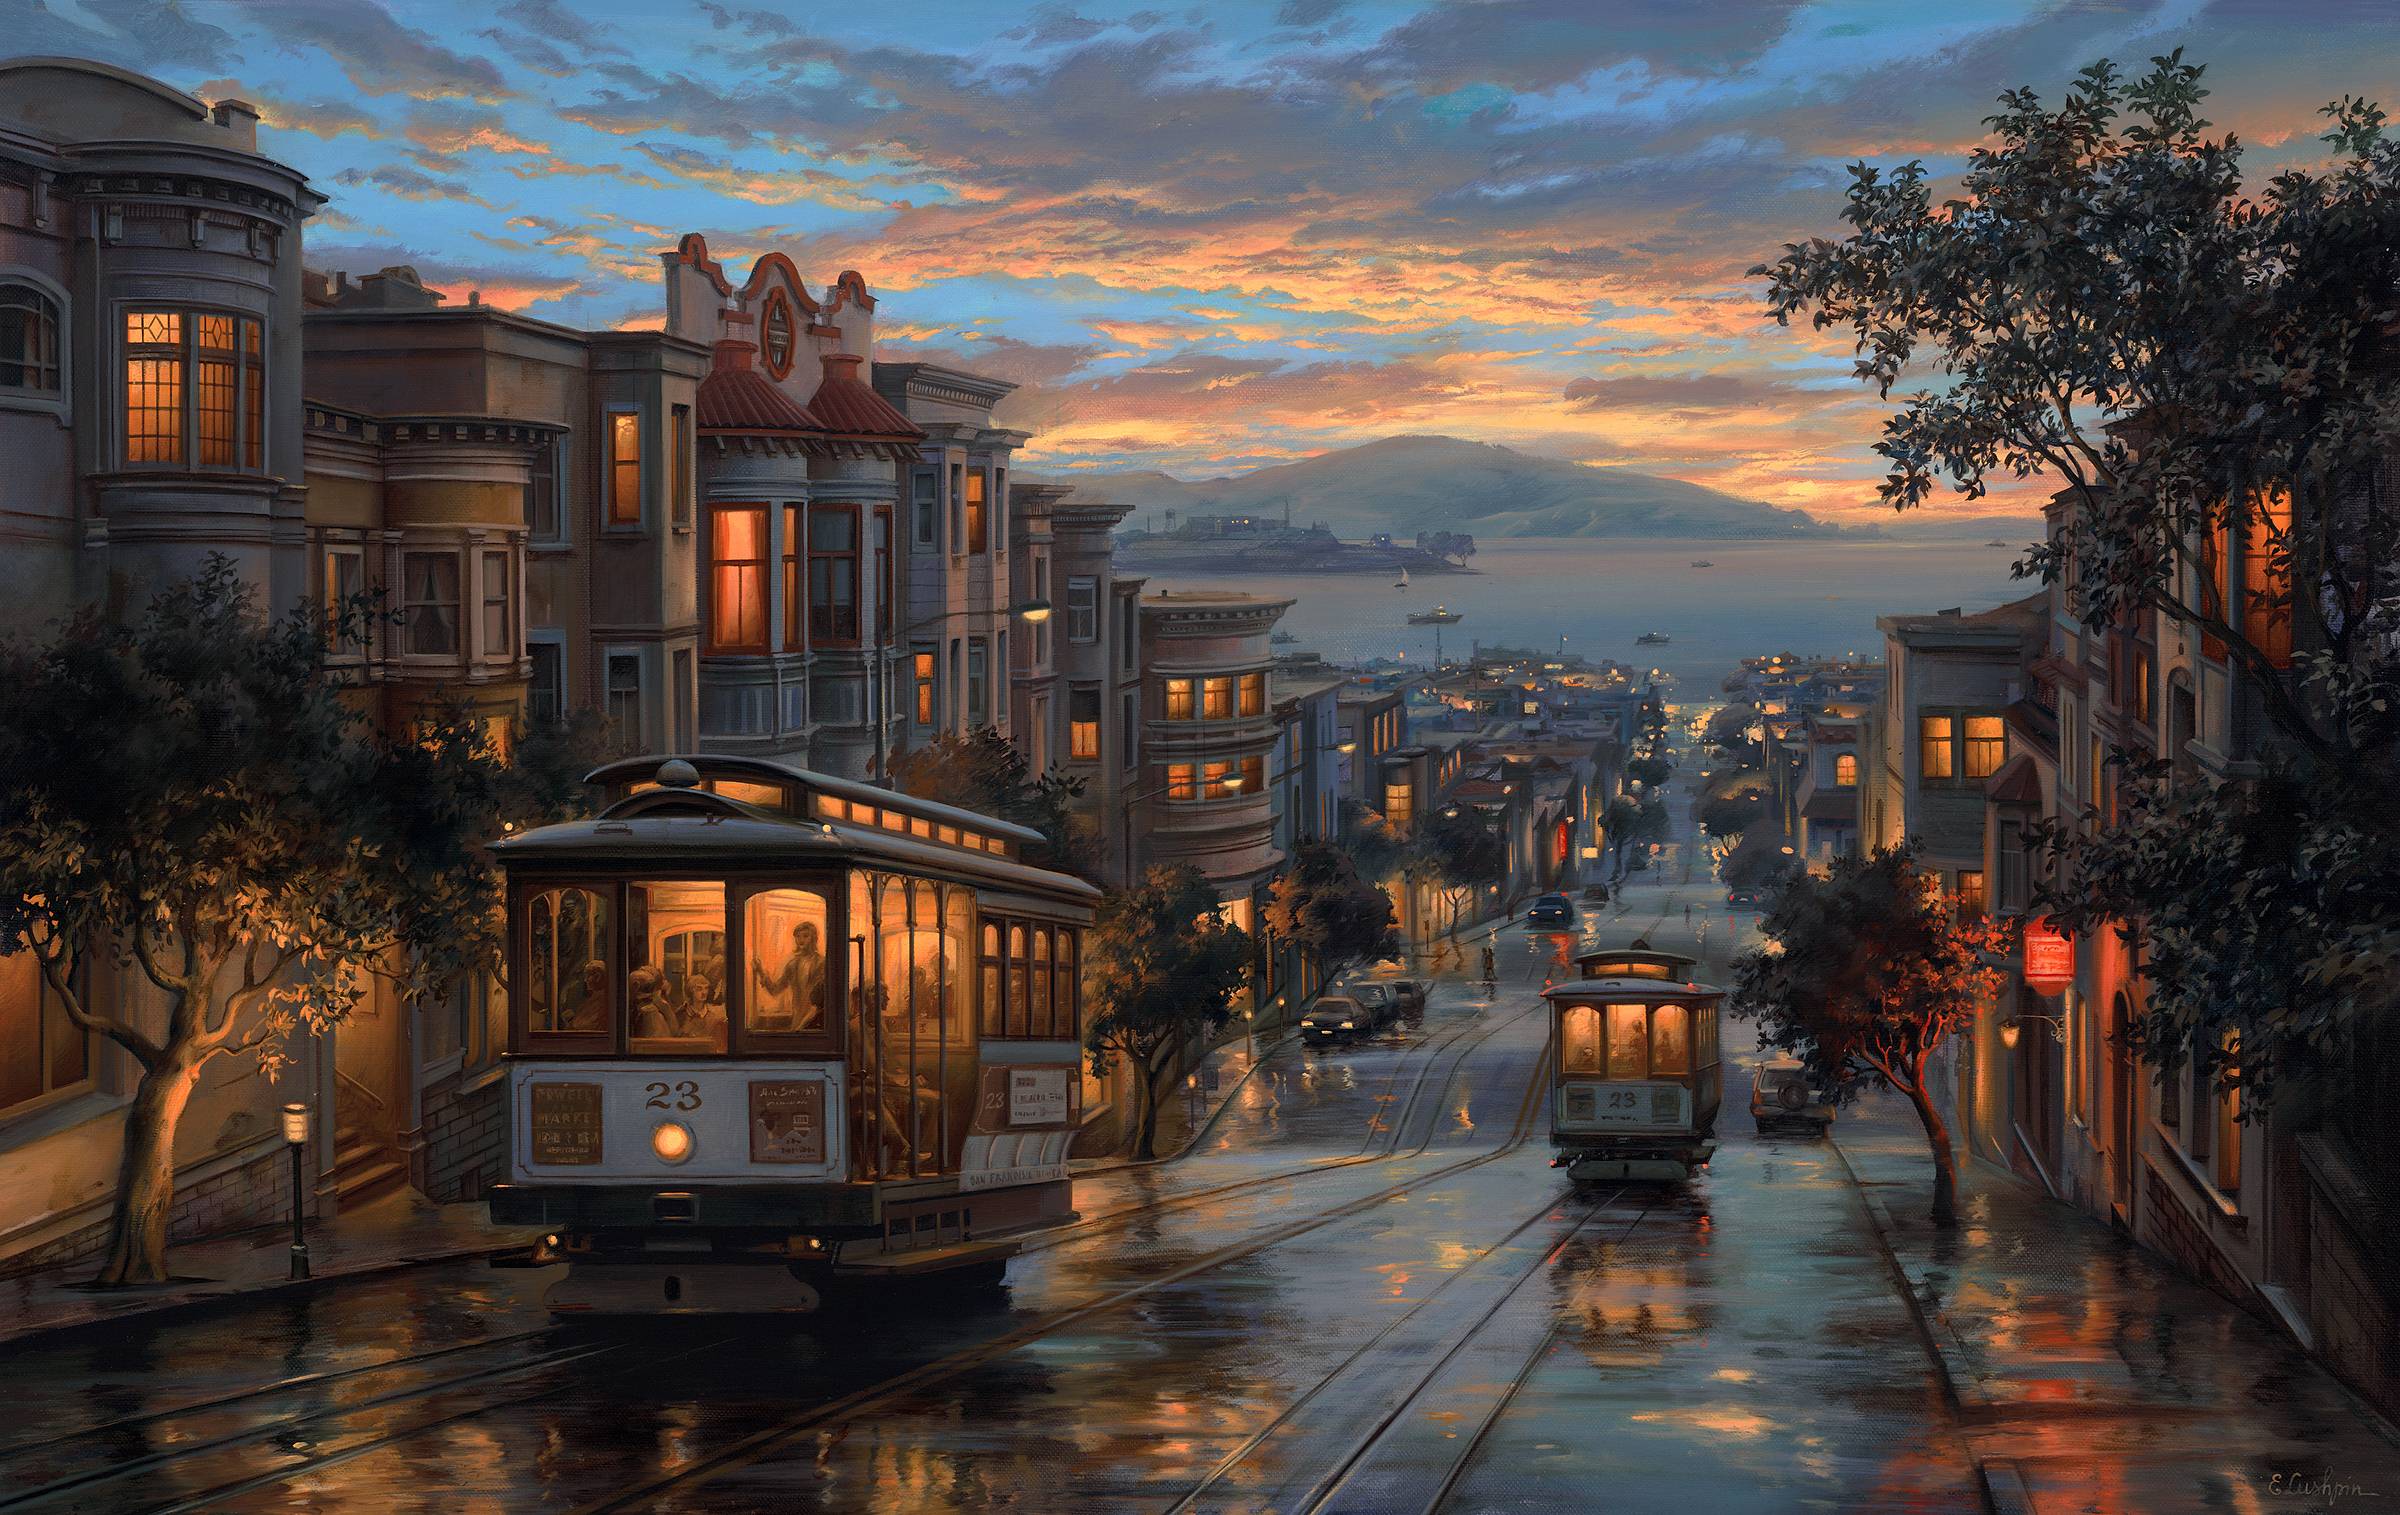 Cable car heaven - San Francisco, Evgeny Lushpin, Oil on canvas, 2013.jpg